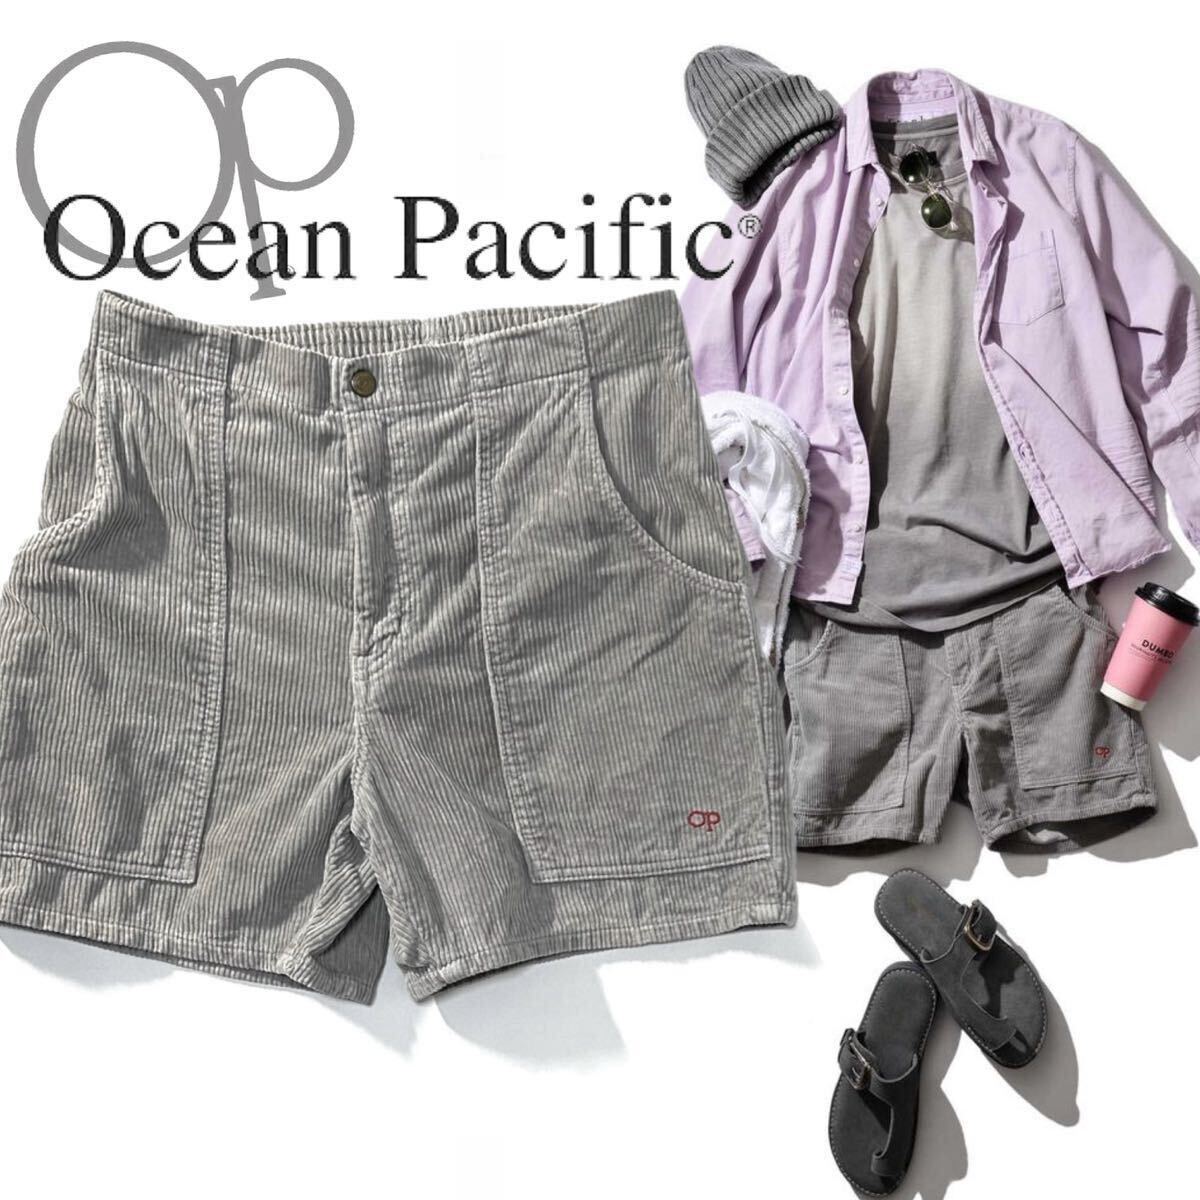 【OCEAN PACIFIC】Safari掲載◎!!OP オーシャンパシフィック 刺繍ロゴ 太畝 サマーコーデュロイショーツ 短丈 ショートパンツ 日本製の画像1